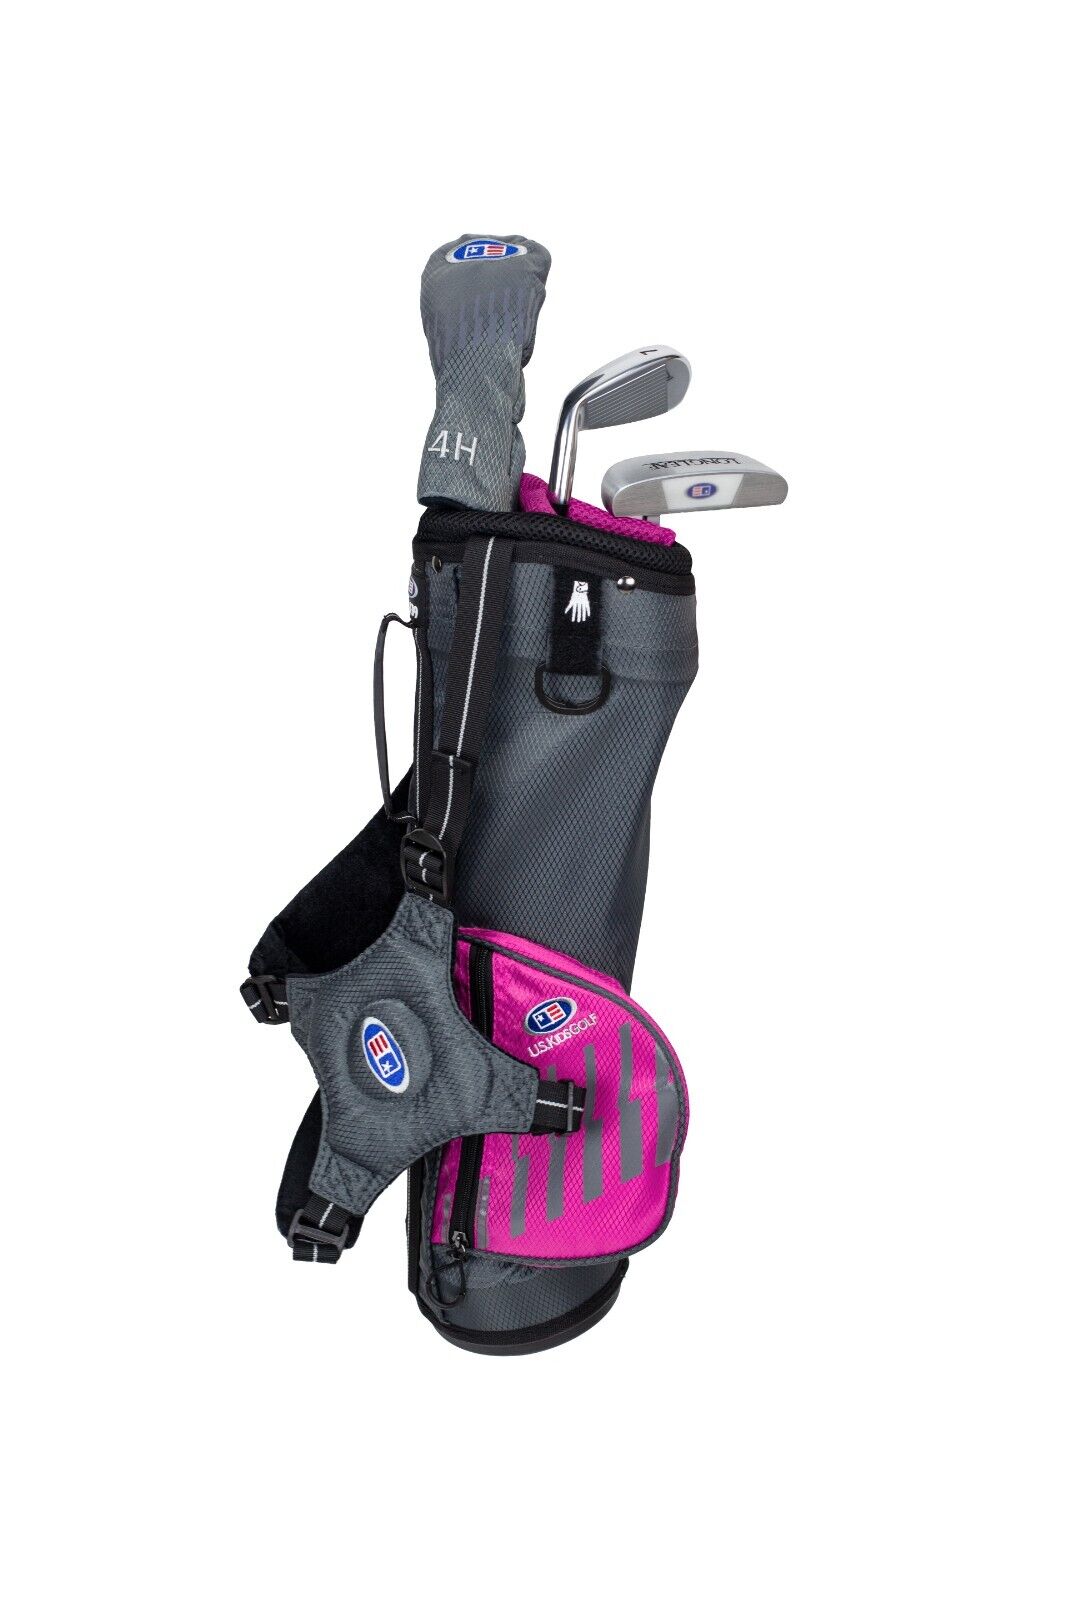 US Kids Golf Ultralight 39 3 Club Carry Bag Set, Pink